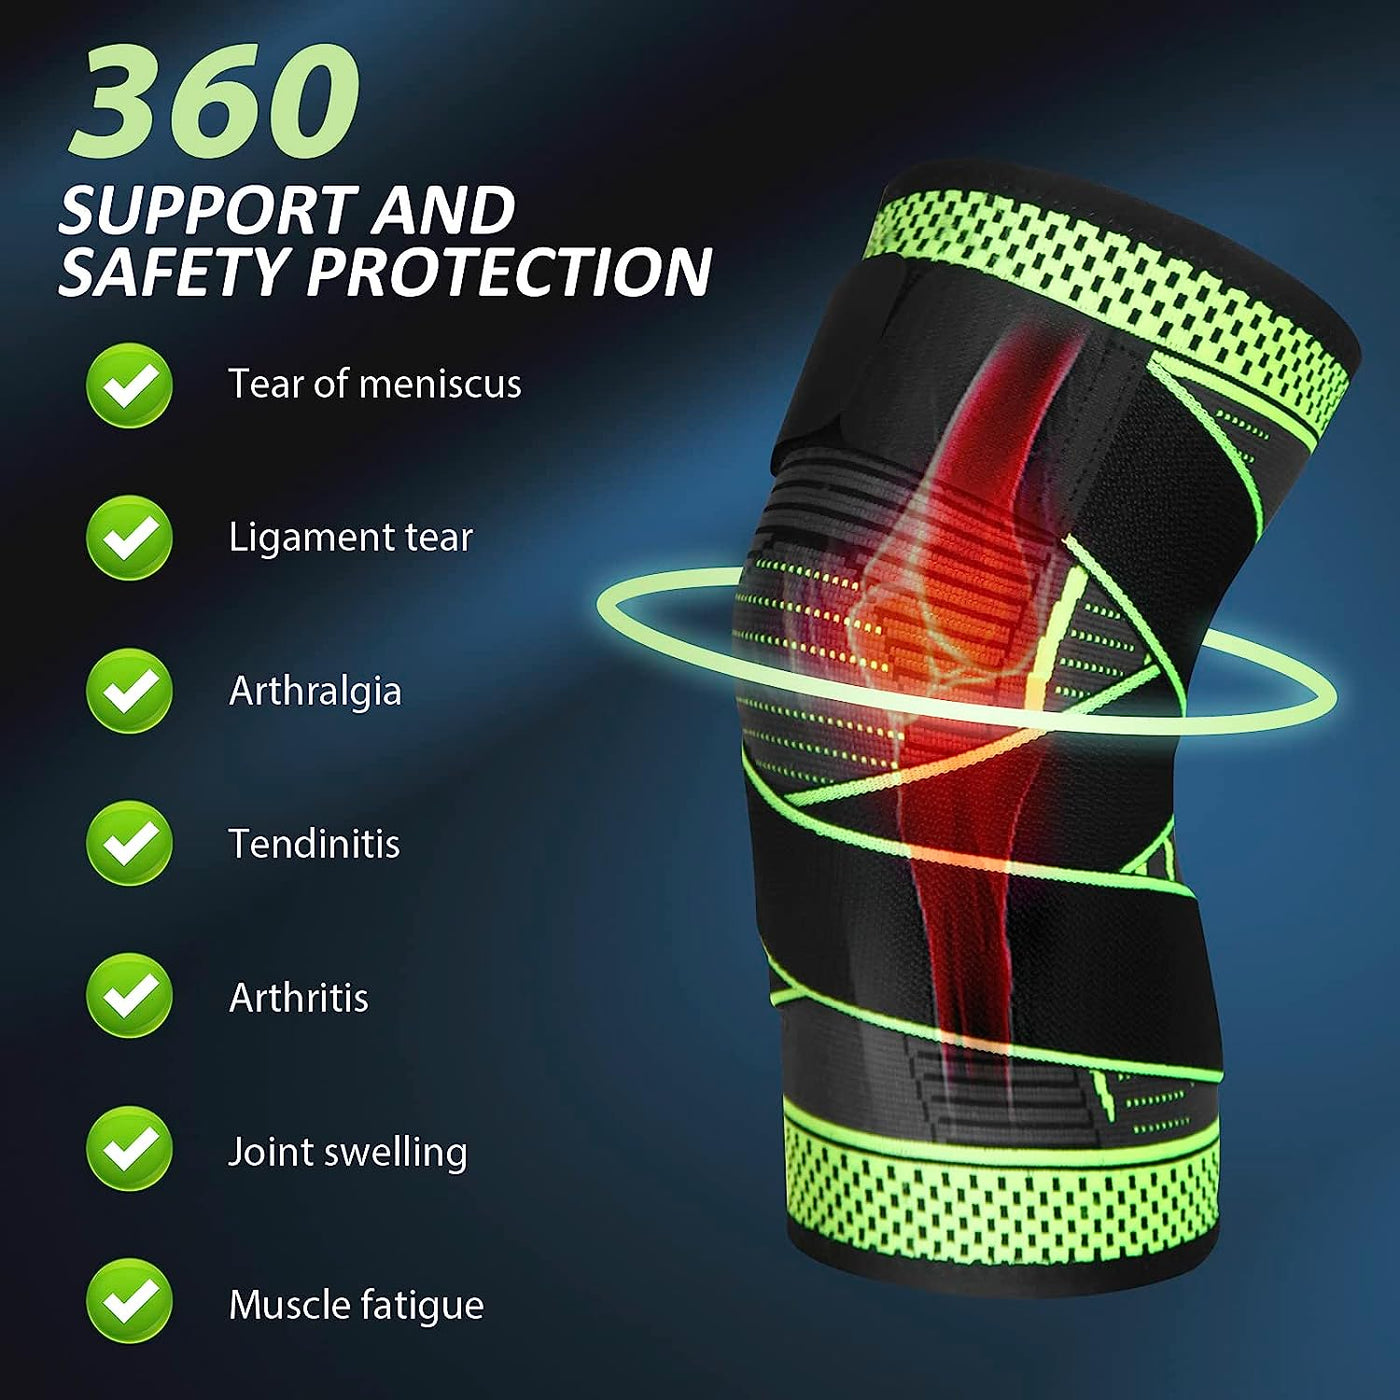 Theroflex© Premium Knee Support Brace: No More Knee Pain